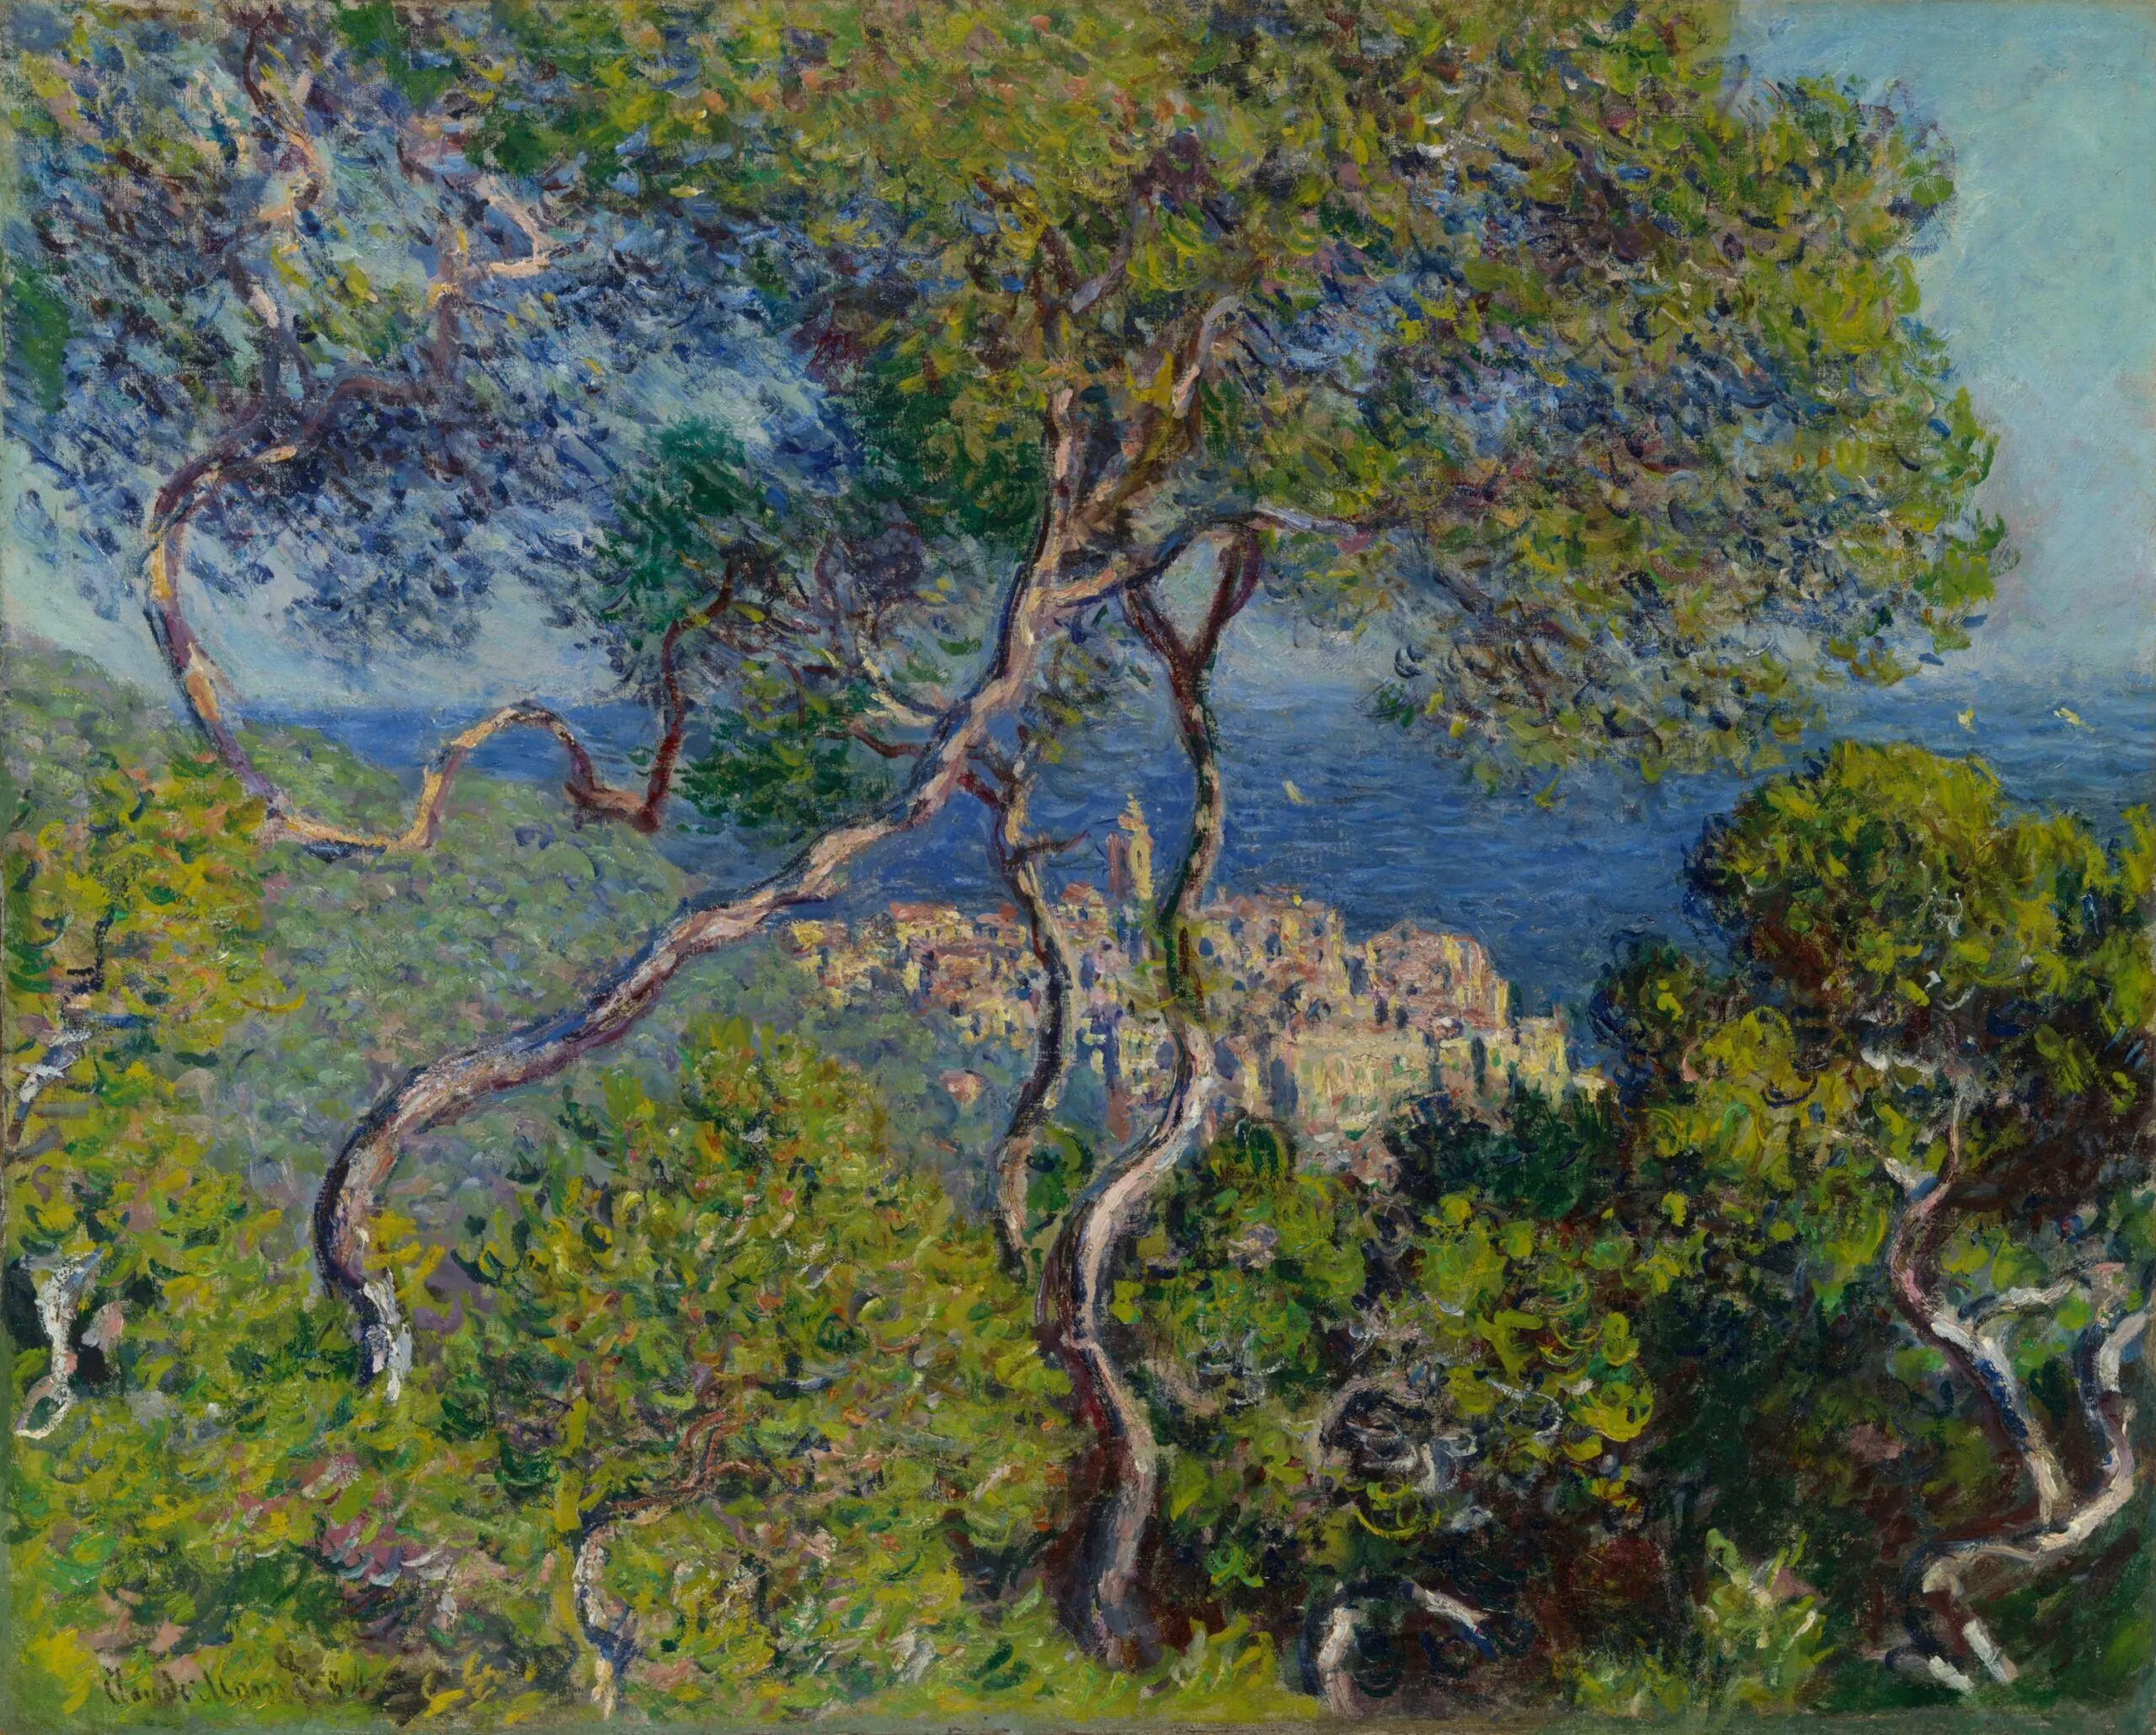 "Bordighera", de Monet